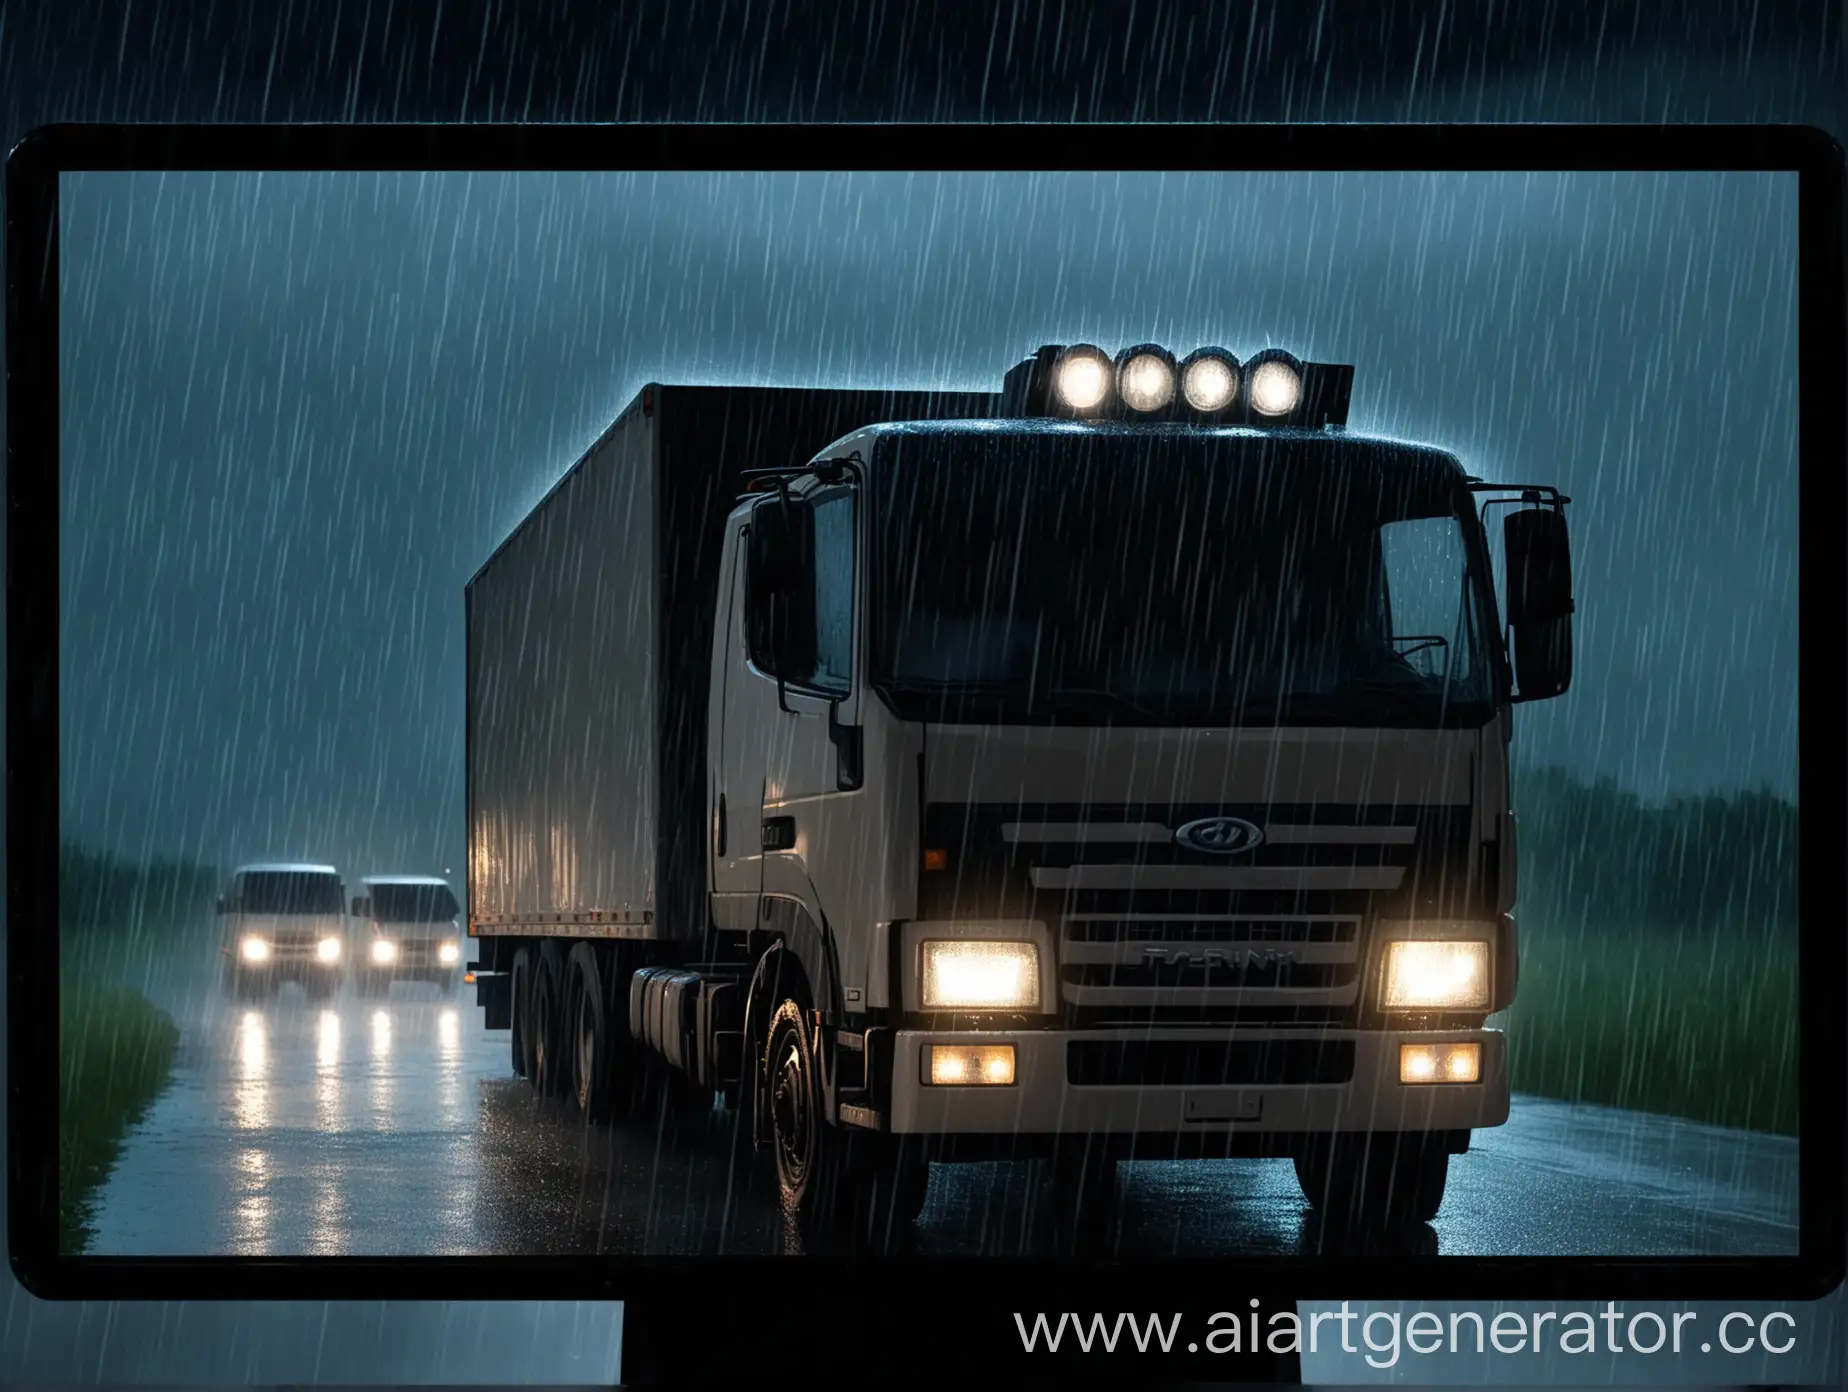 Night-Rainy-Truck-with-Bright-Headlights